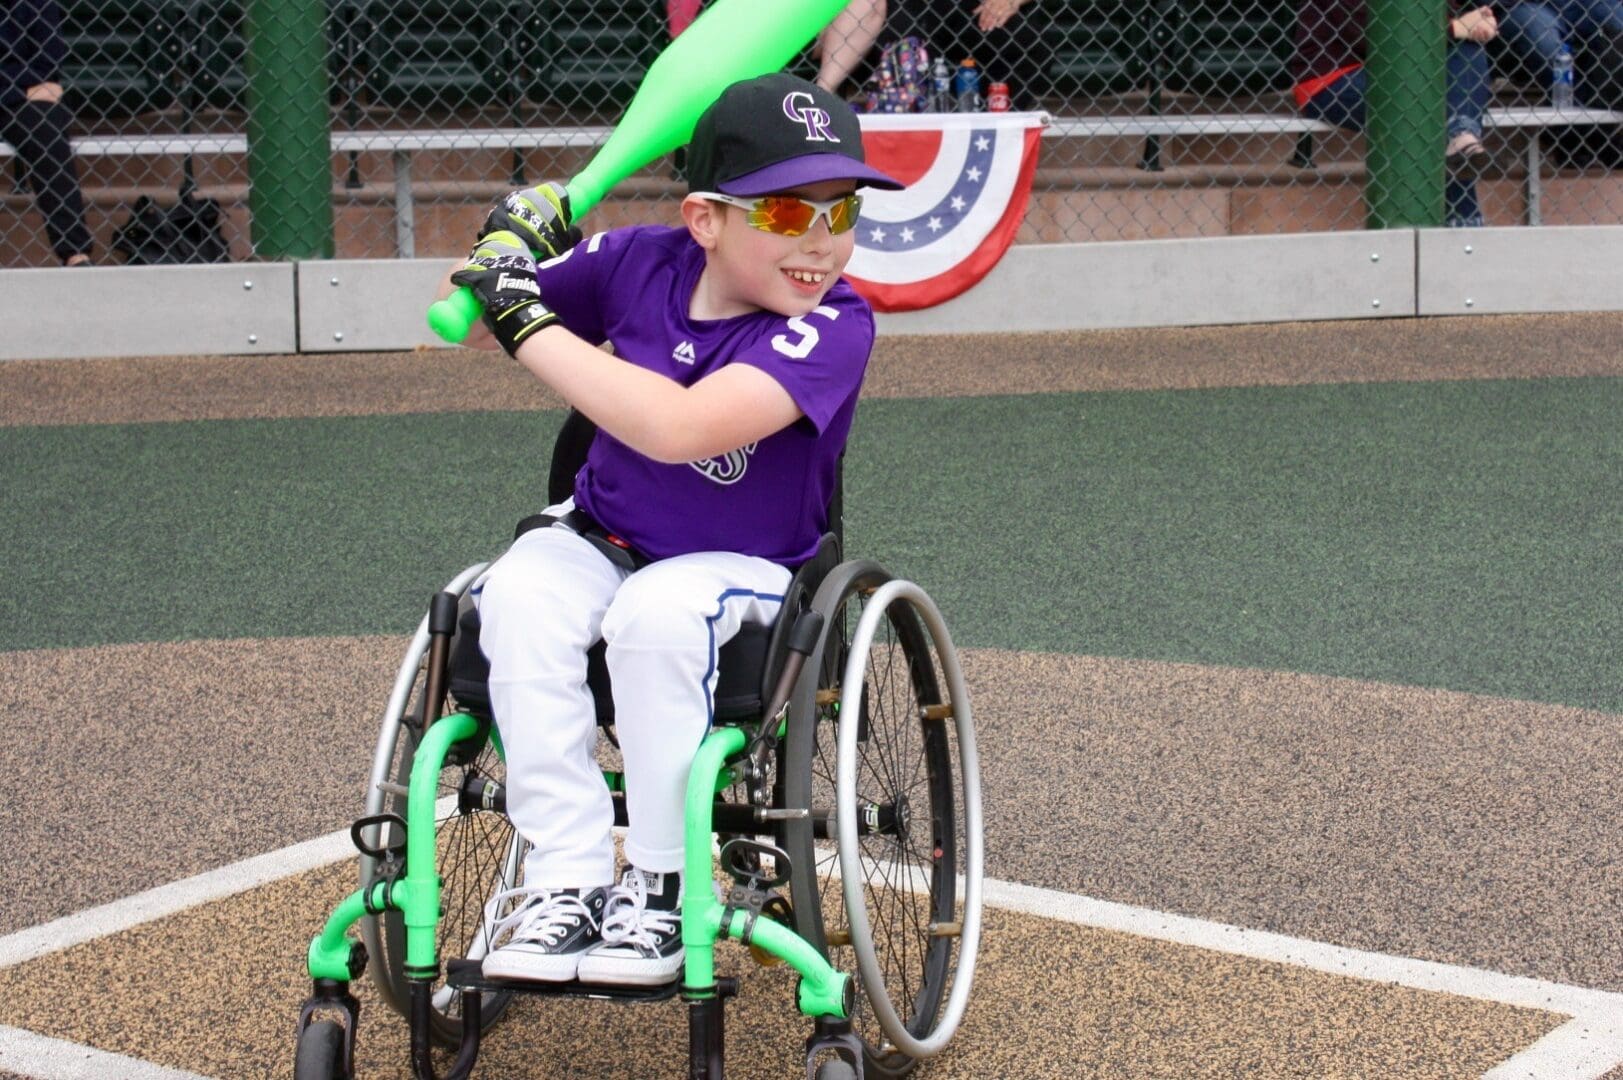 A boy in a wheelchair swinging a bat at a baseball game.